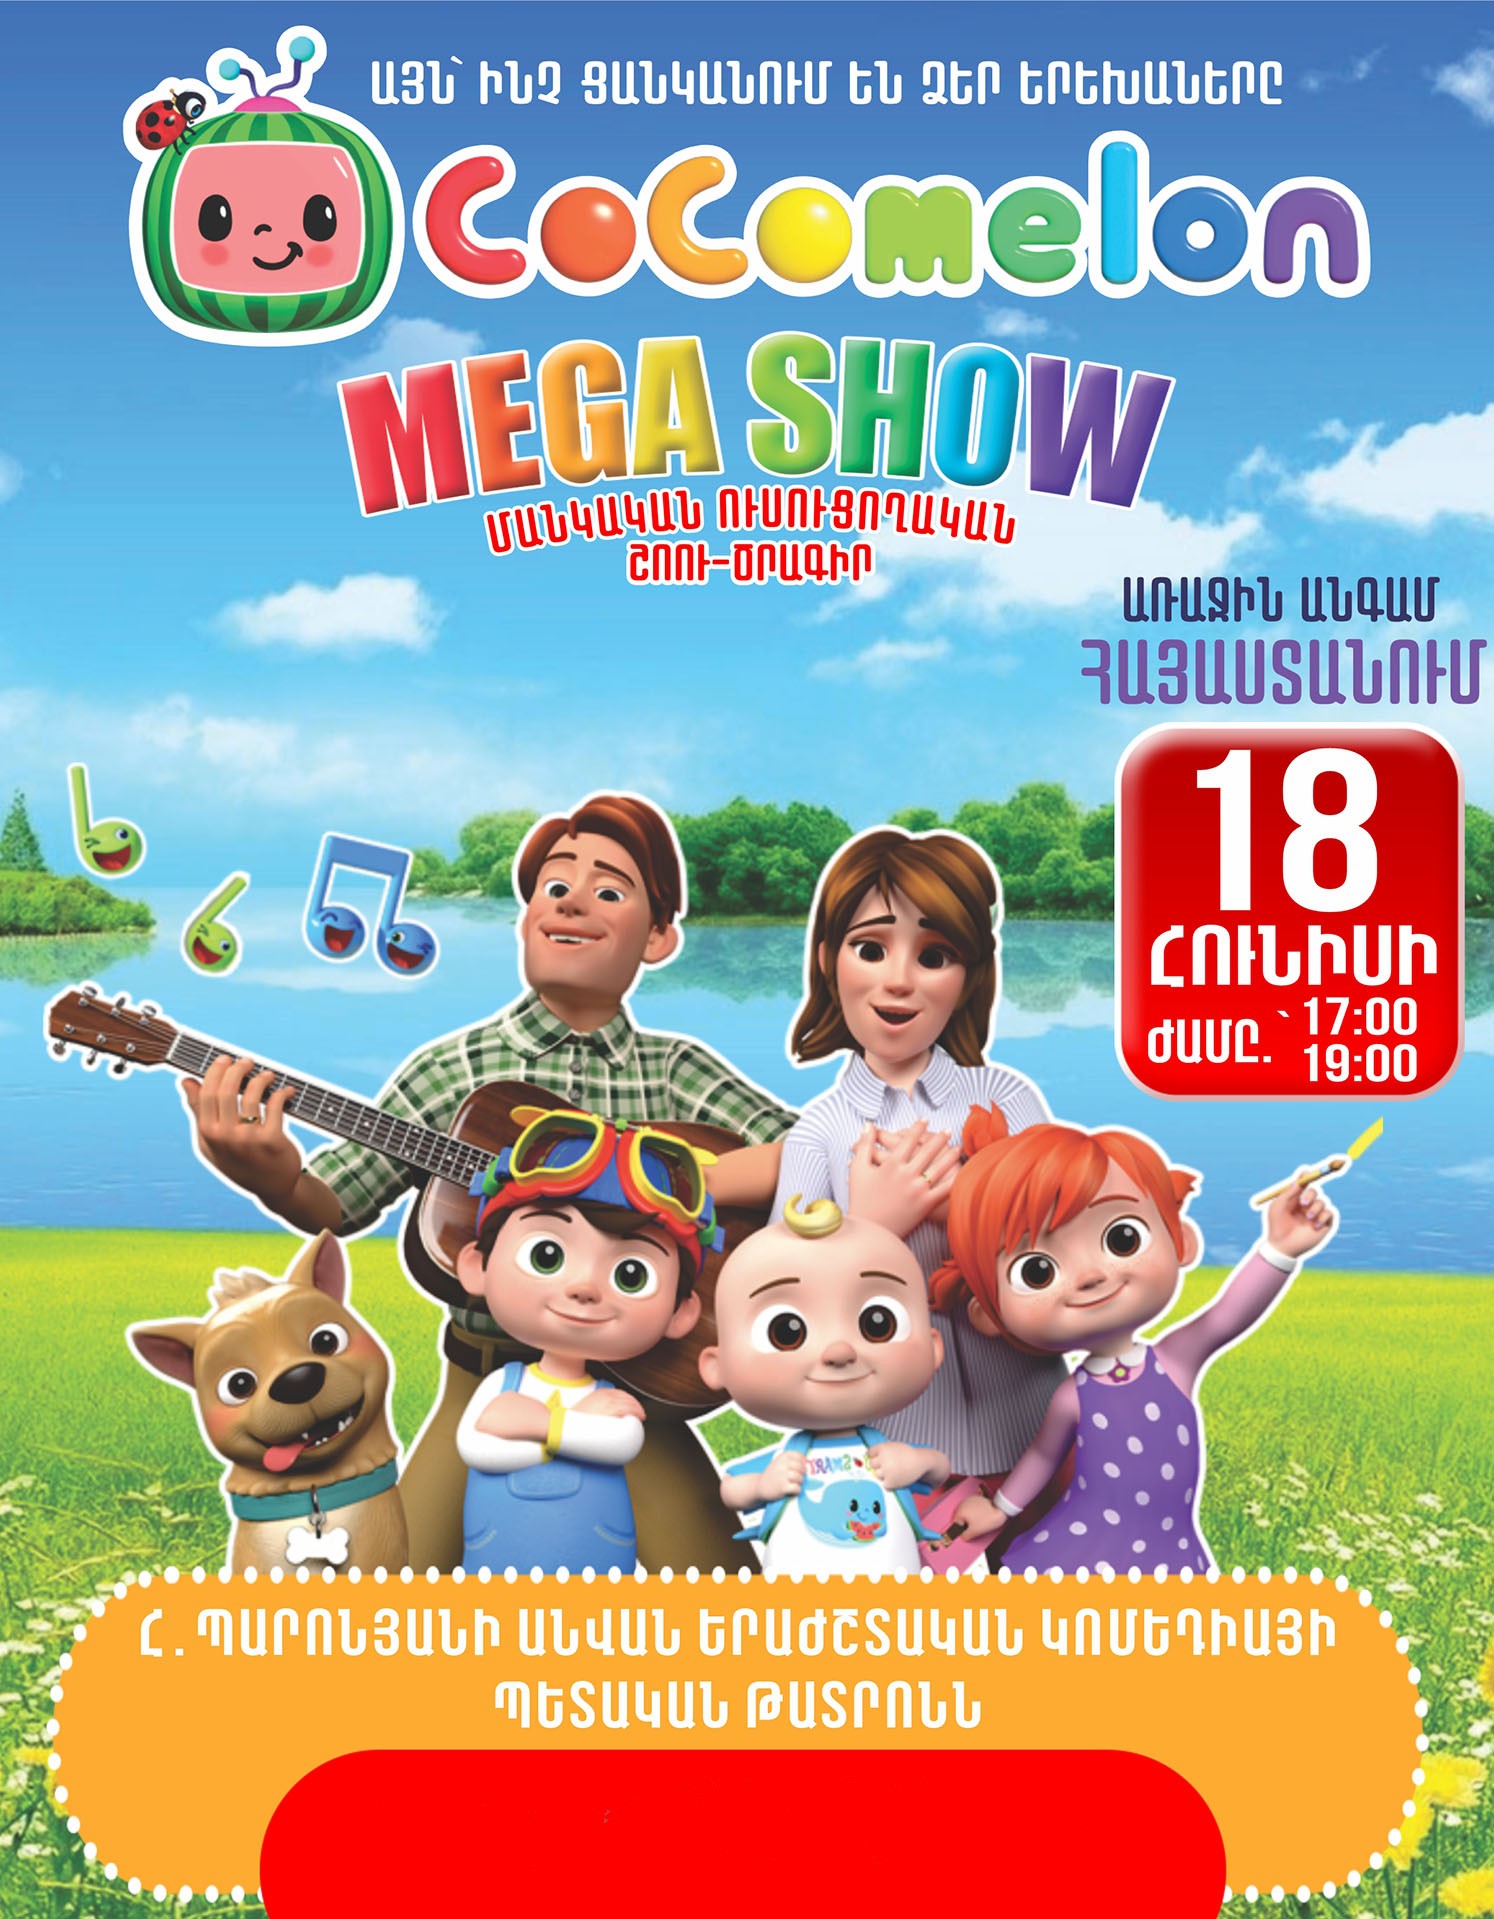 Cocomelon Mega Show